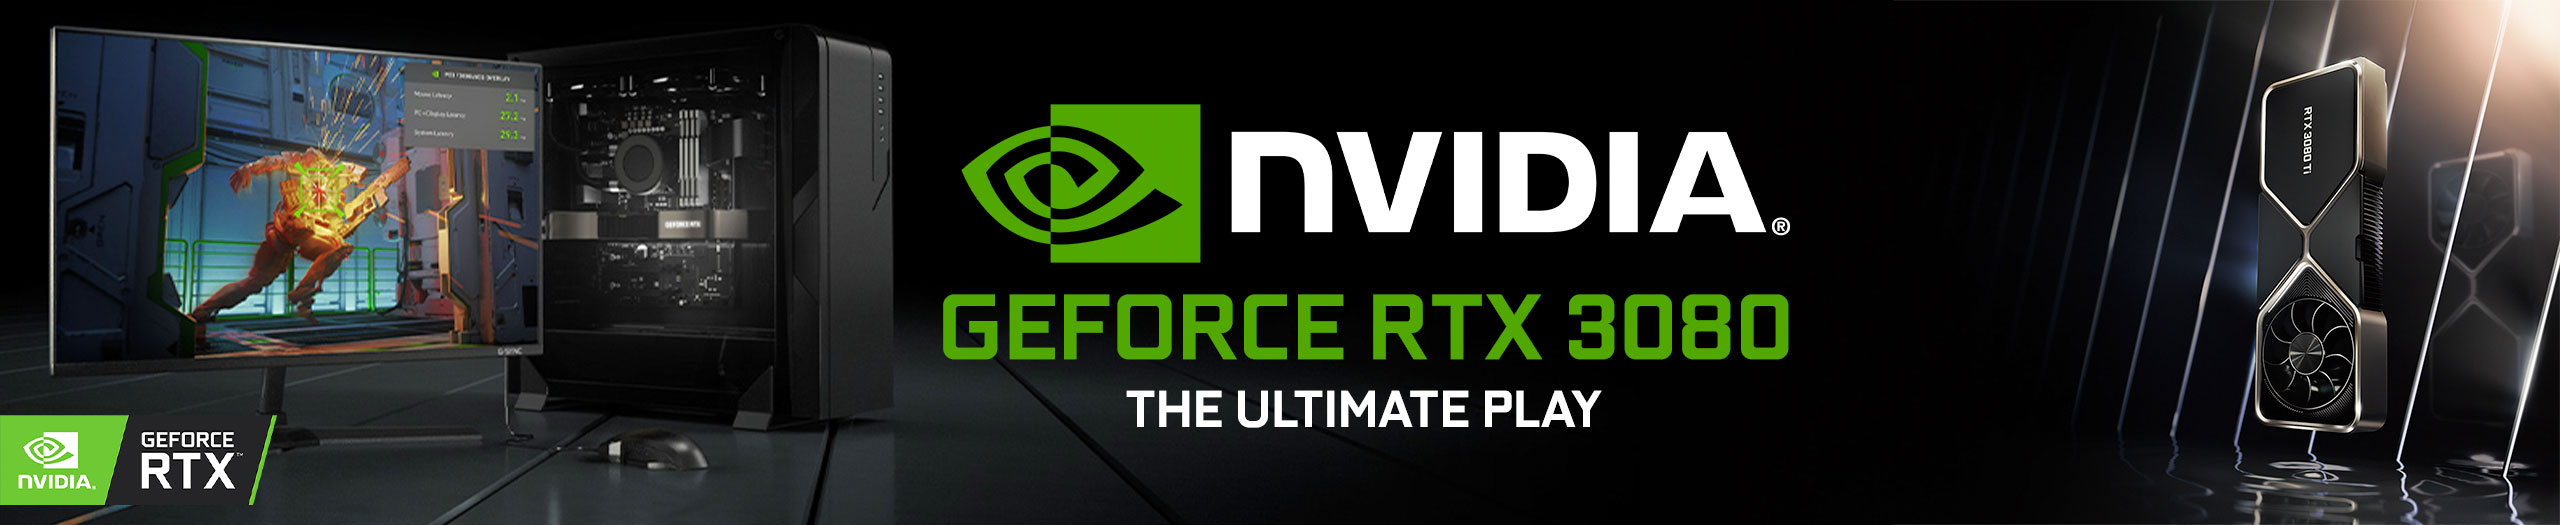 NVIDIA Geforce RTX 3080 Best Deals